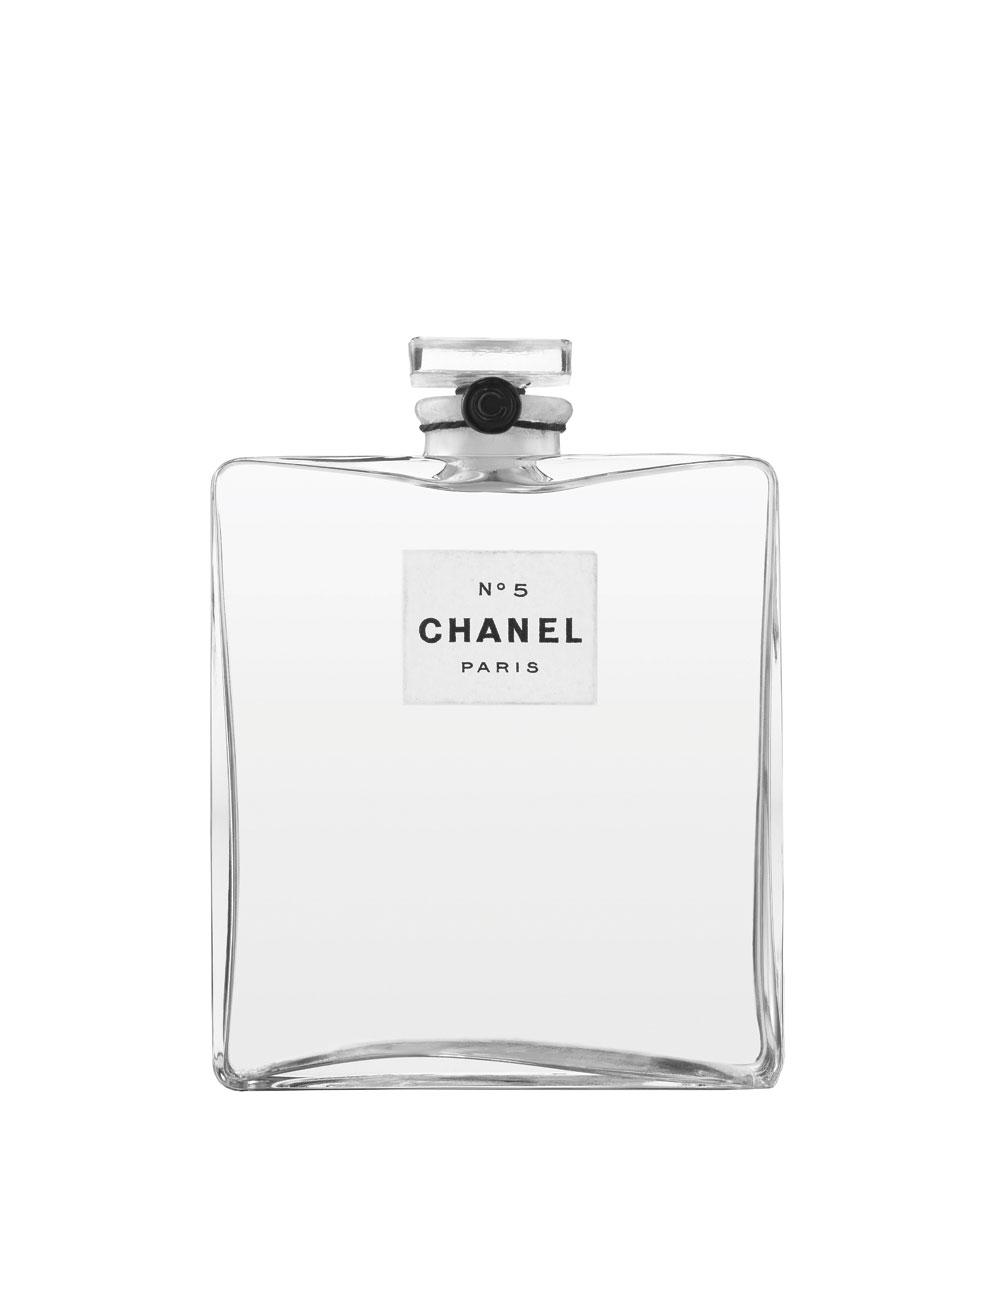 Un flacon de parfum N°5 de Chanel, datant de 1921 .